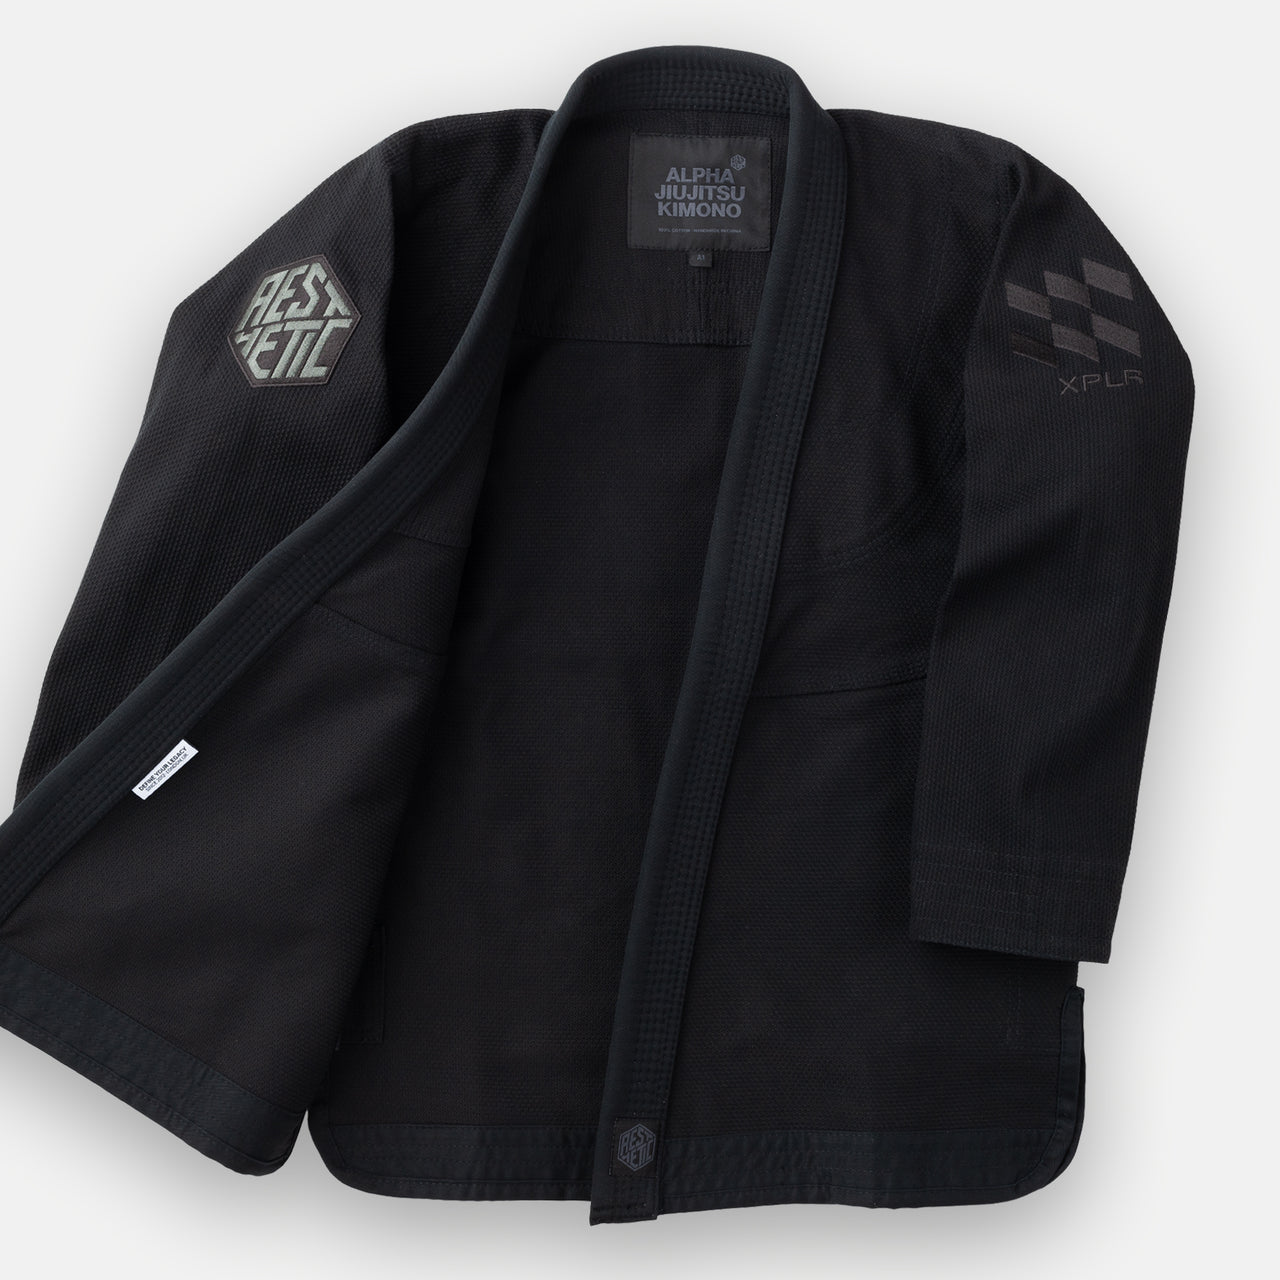 Aesthetic The Alpha+ Women's Kimono - Black/Gunmetal